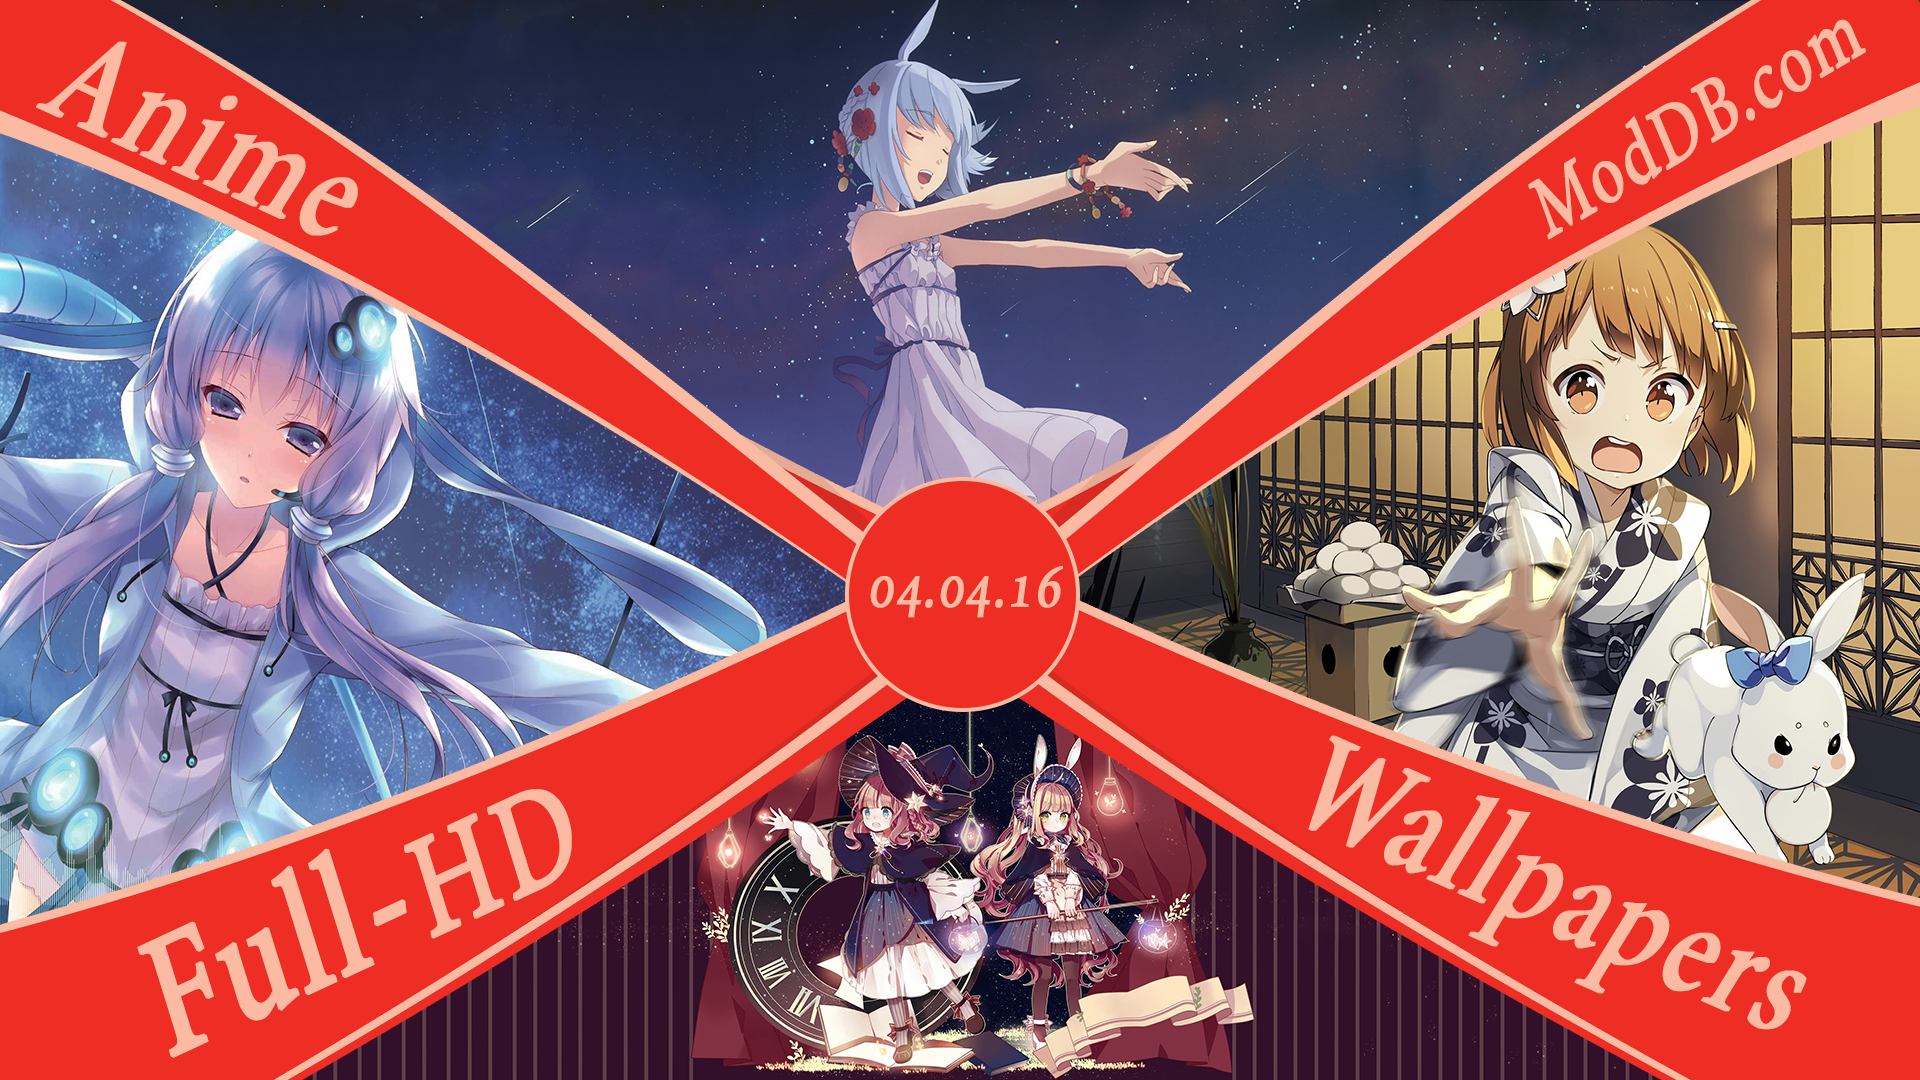 Anime wallpaper file - ModDB